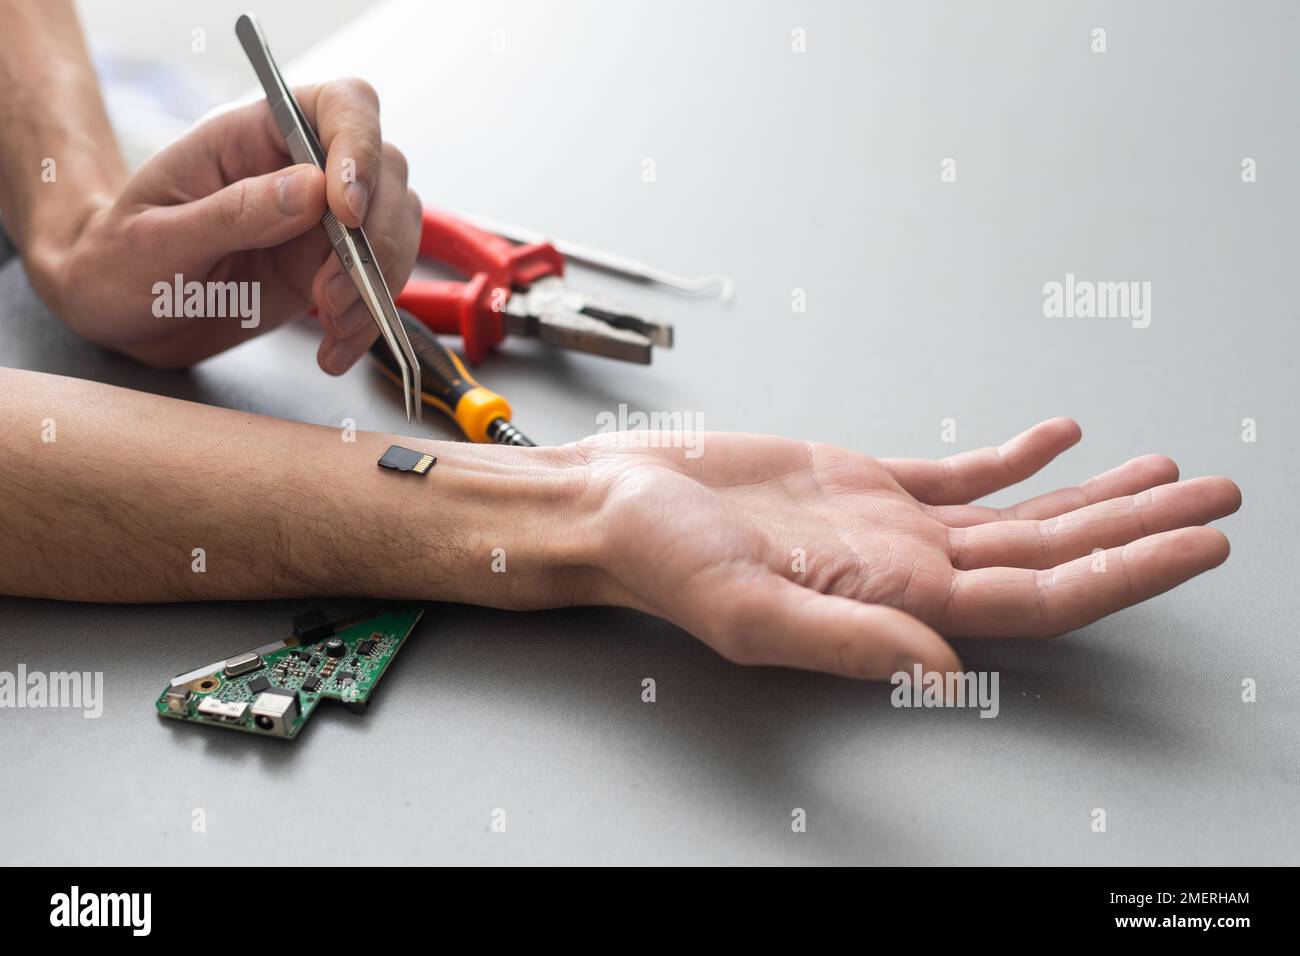 Robot arm concept. Man shows biomechanical prosthetic hand. Guy repairs his hand with tool. Bioengineering, transhumanism, biohacking, human cyborg Stock Photo